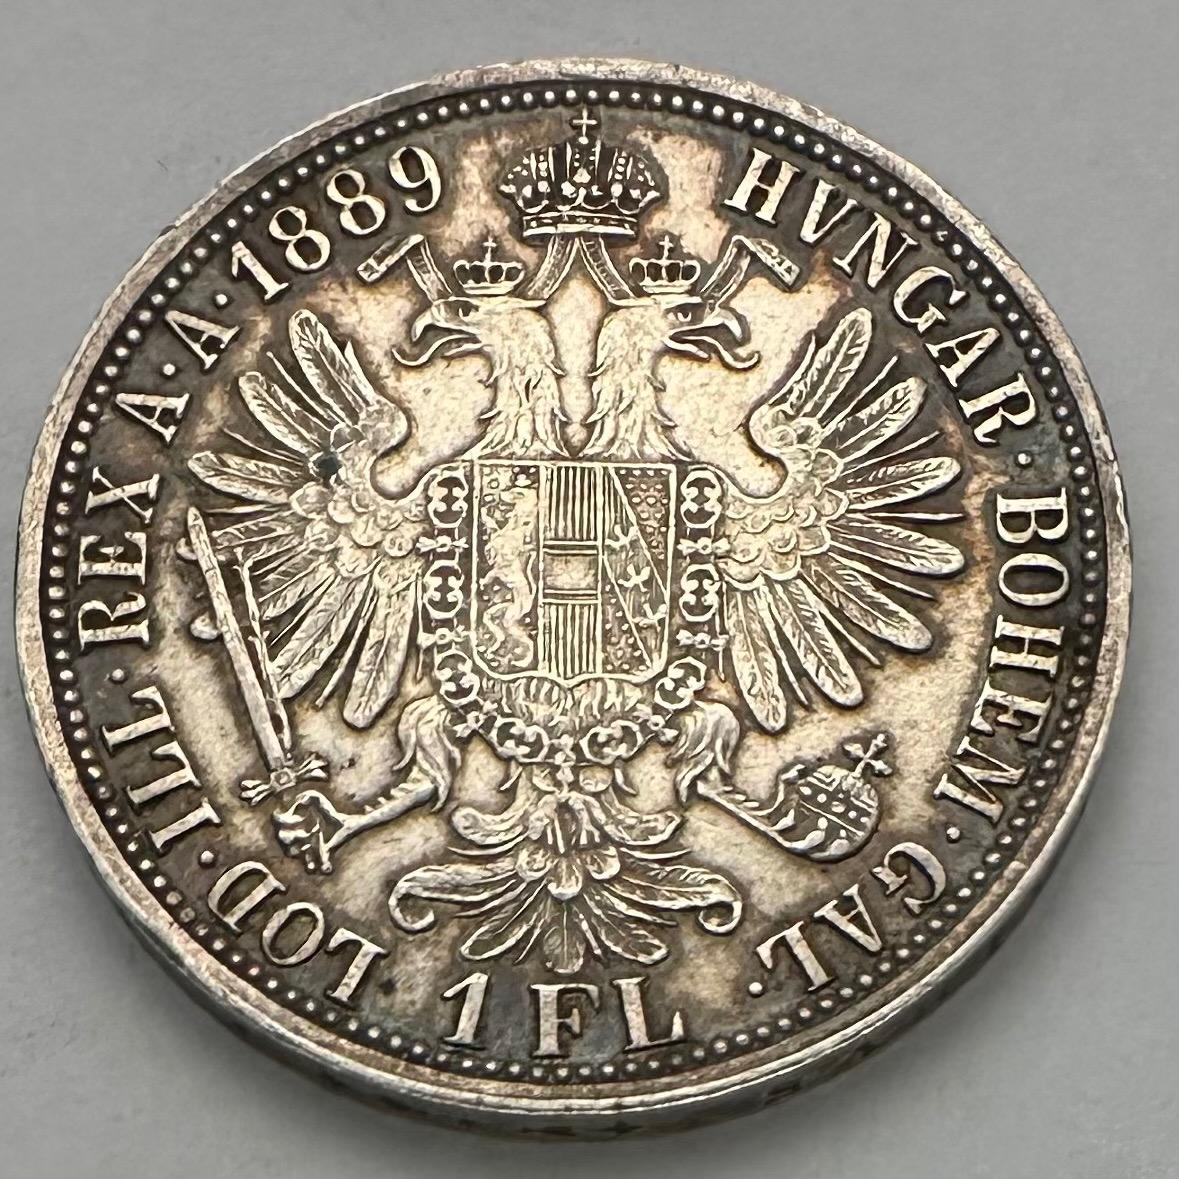 Rakúsko Uhorsko FJI. 1 Zlatník 1889 patina stav!! - Numizmatika